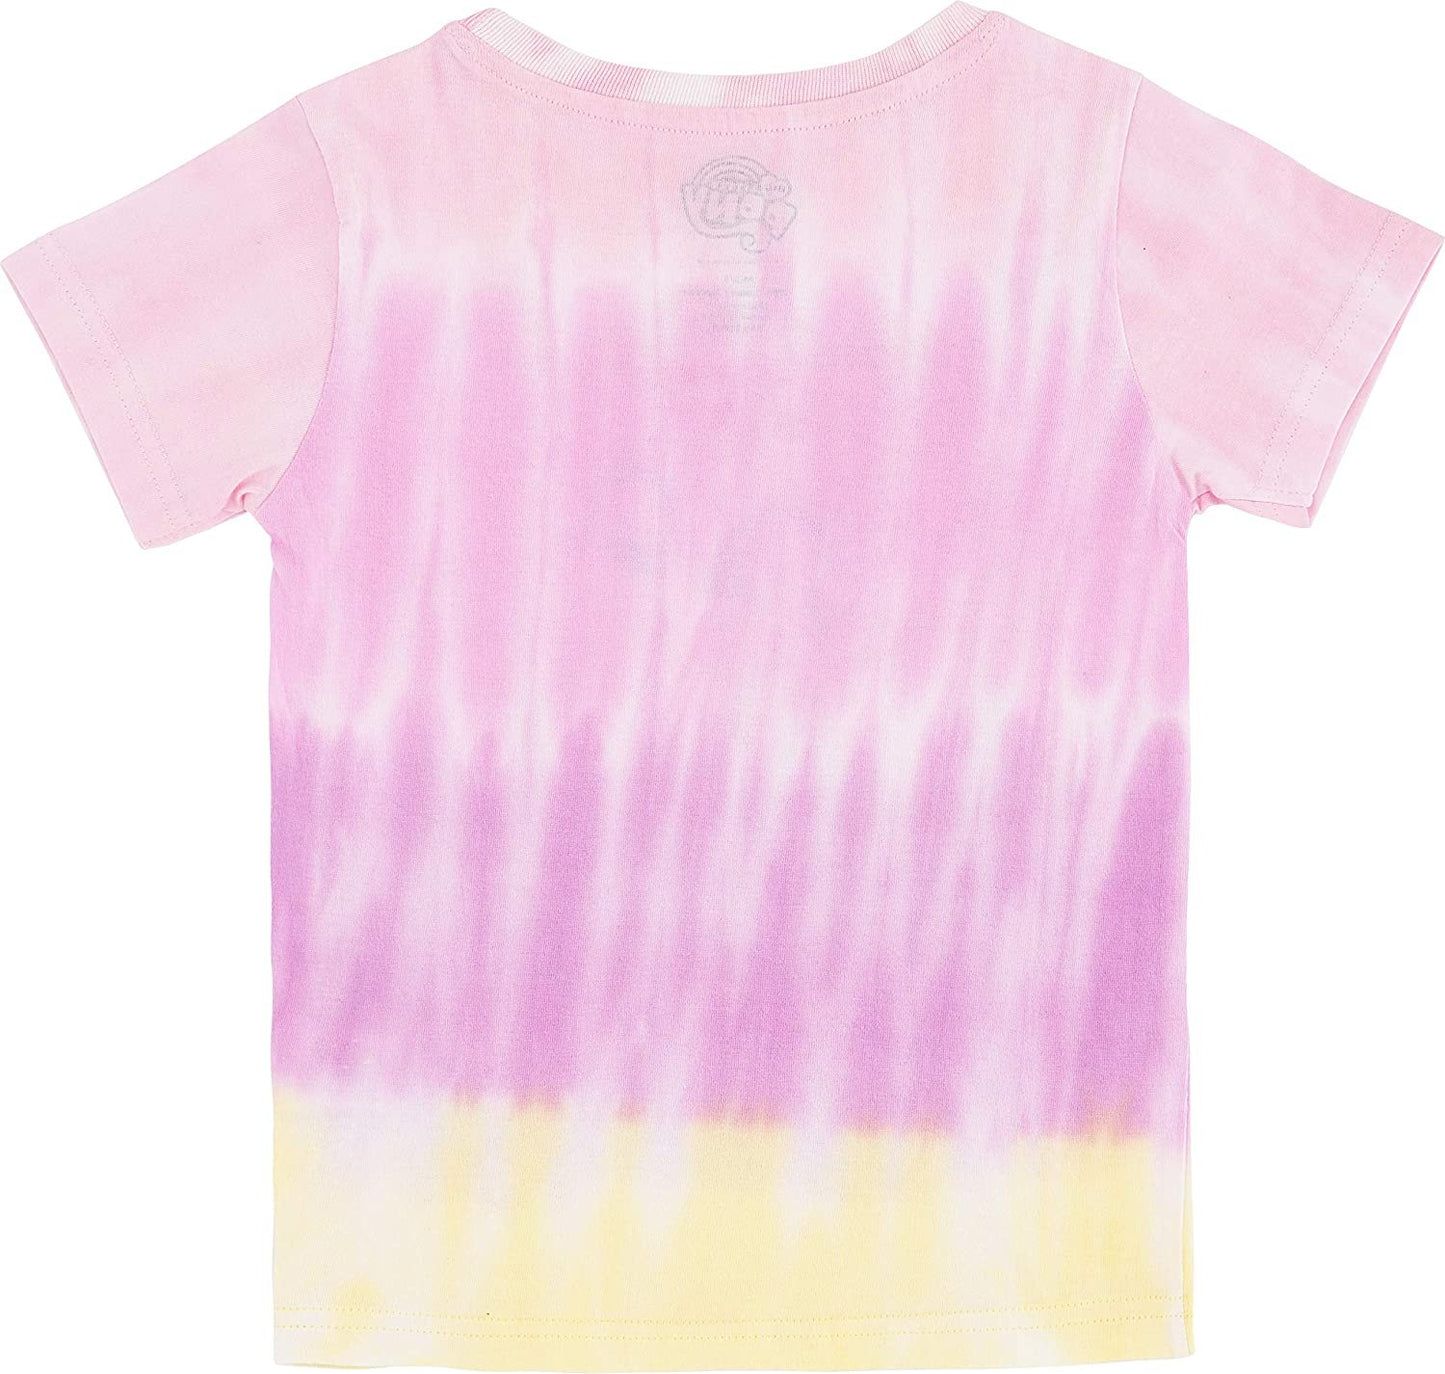 My Little Pony Girls Tie Dye Graphic T-Shirt - Rainbow Dash, Pinkie Pie, Twilight Sparkle, Apple Jack, Sizes 4-6X